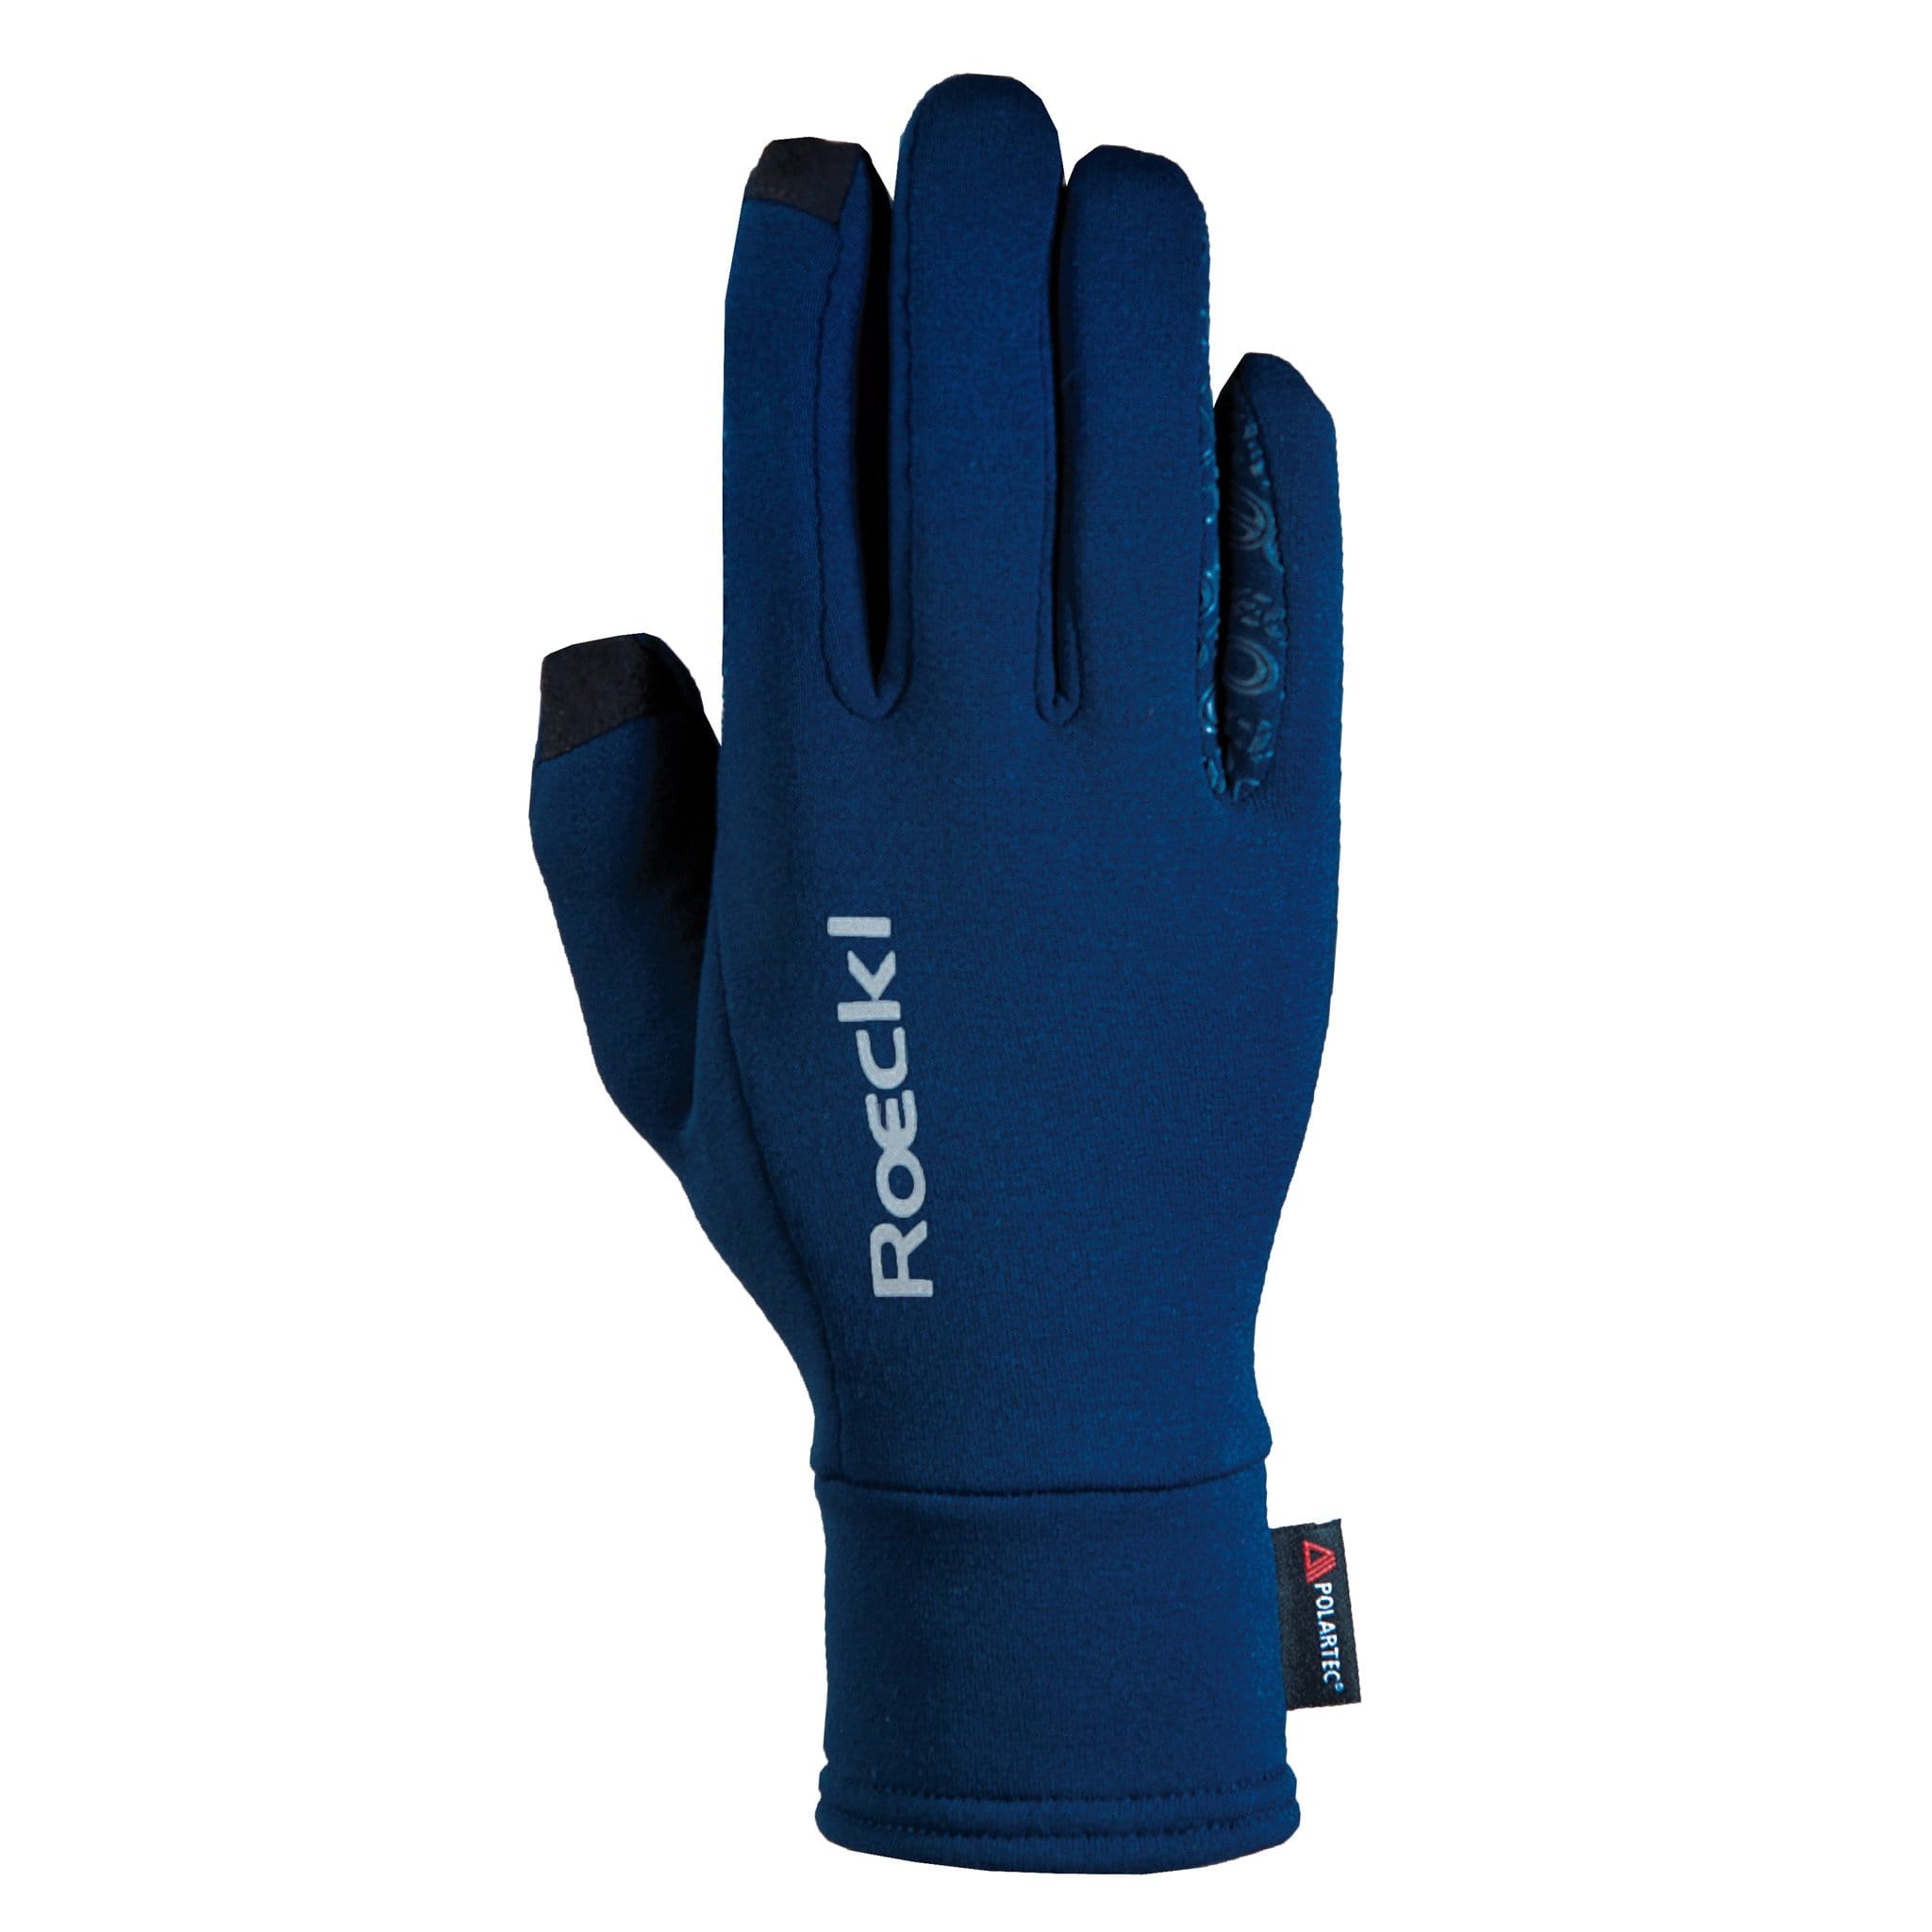 Roeckl Polartec Touch Gloves Navy 3301-623-590